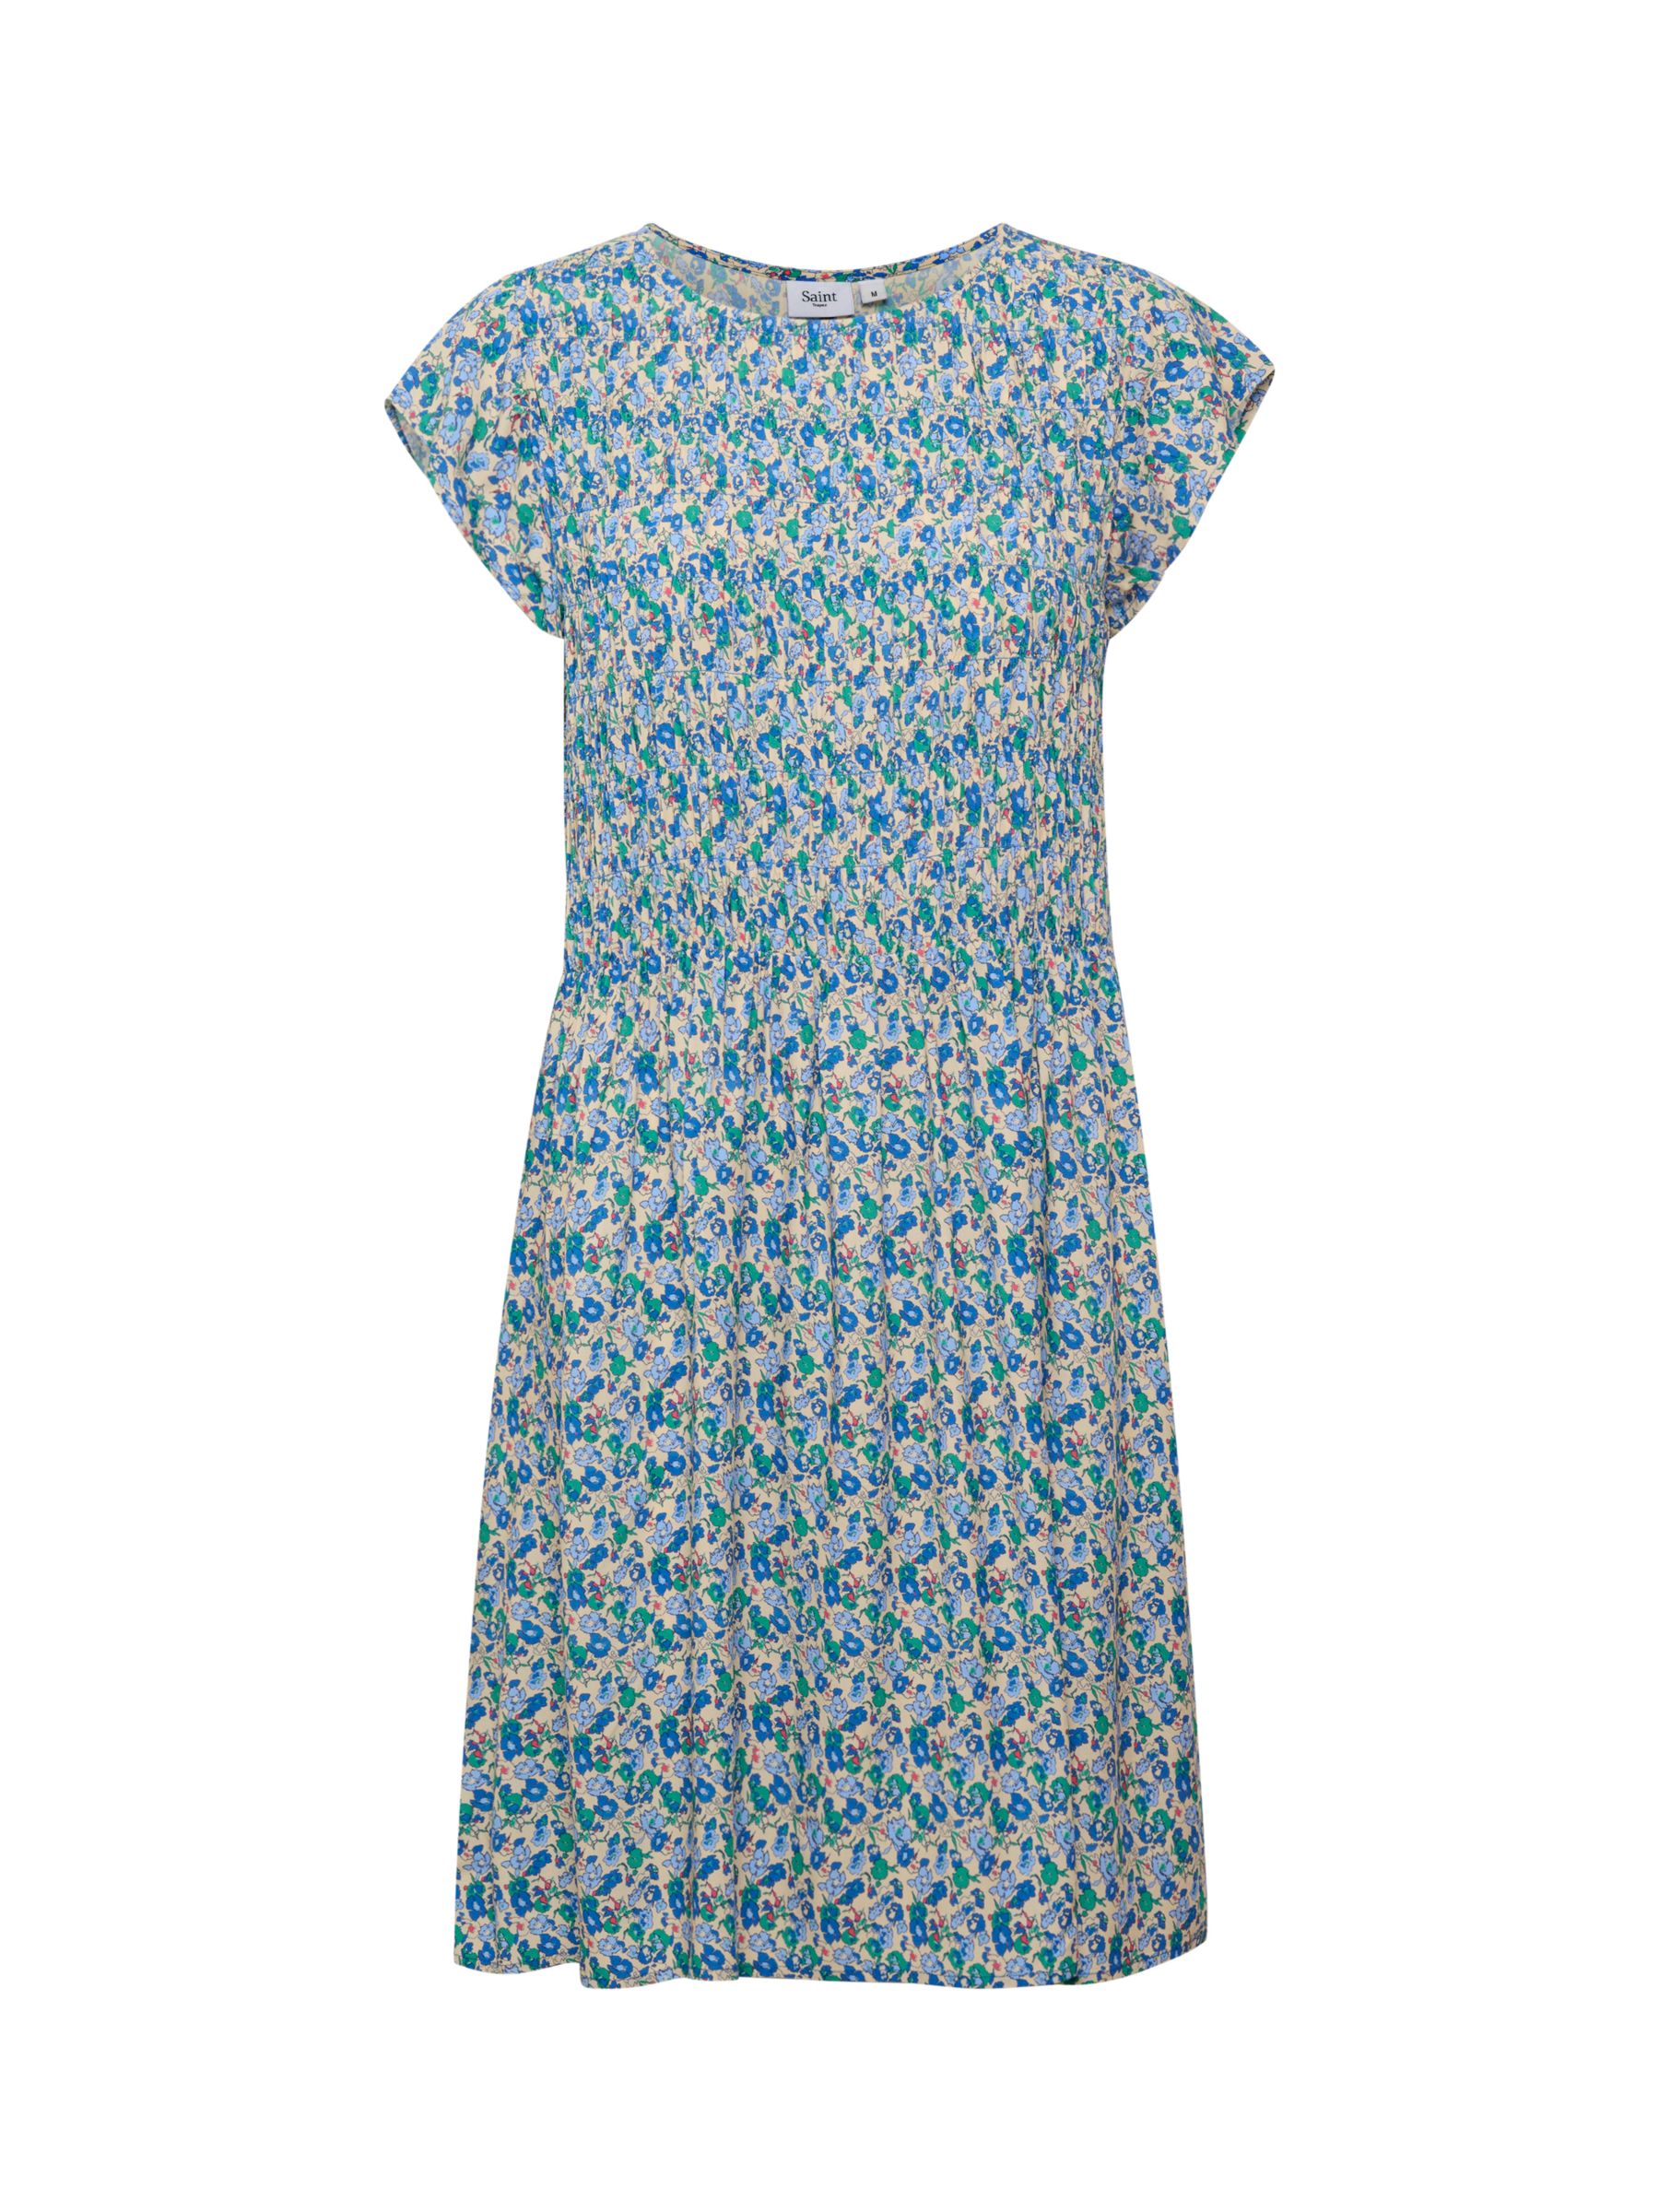 Saint Tropez Gisla Ditsy Print Dress, Blue at John Lewis & Partners